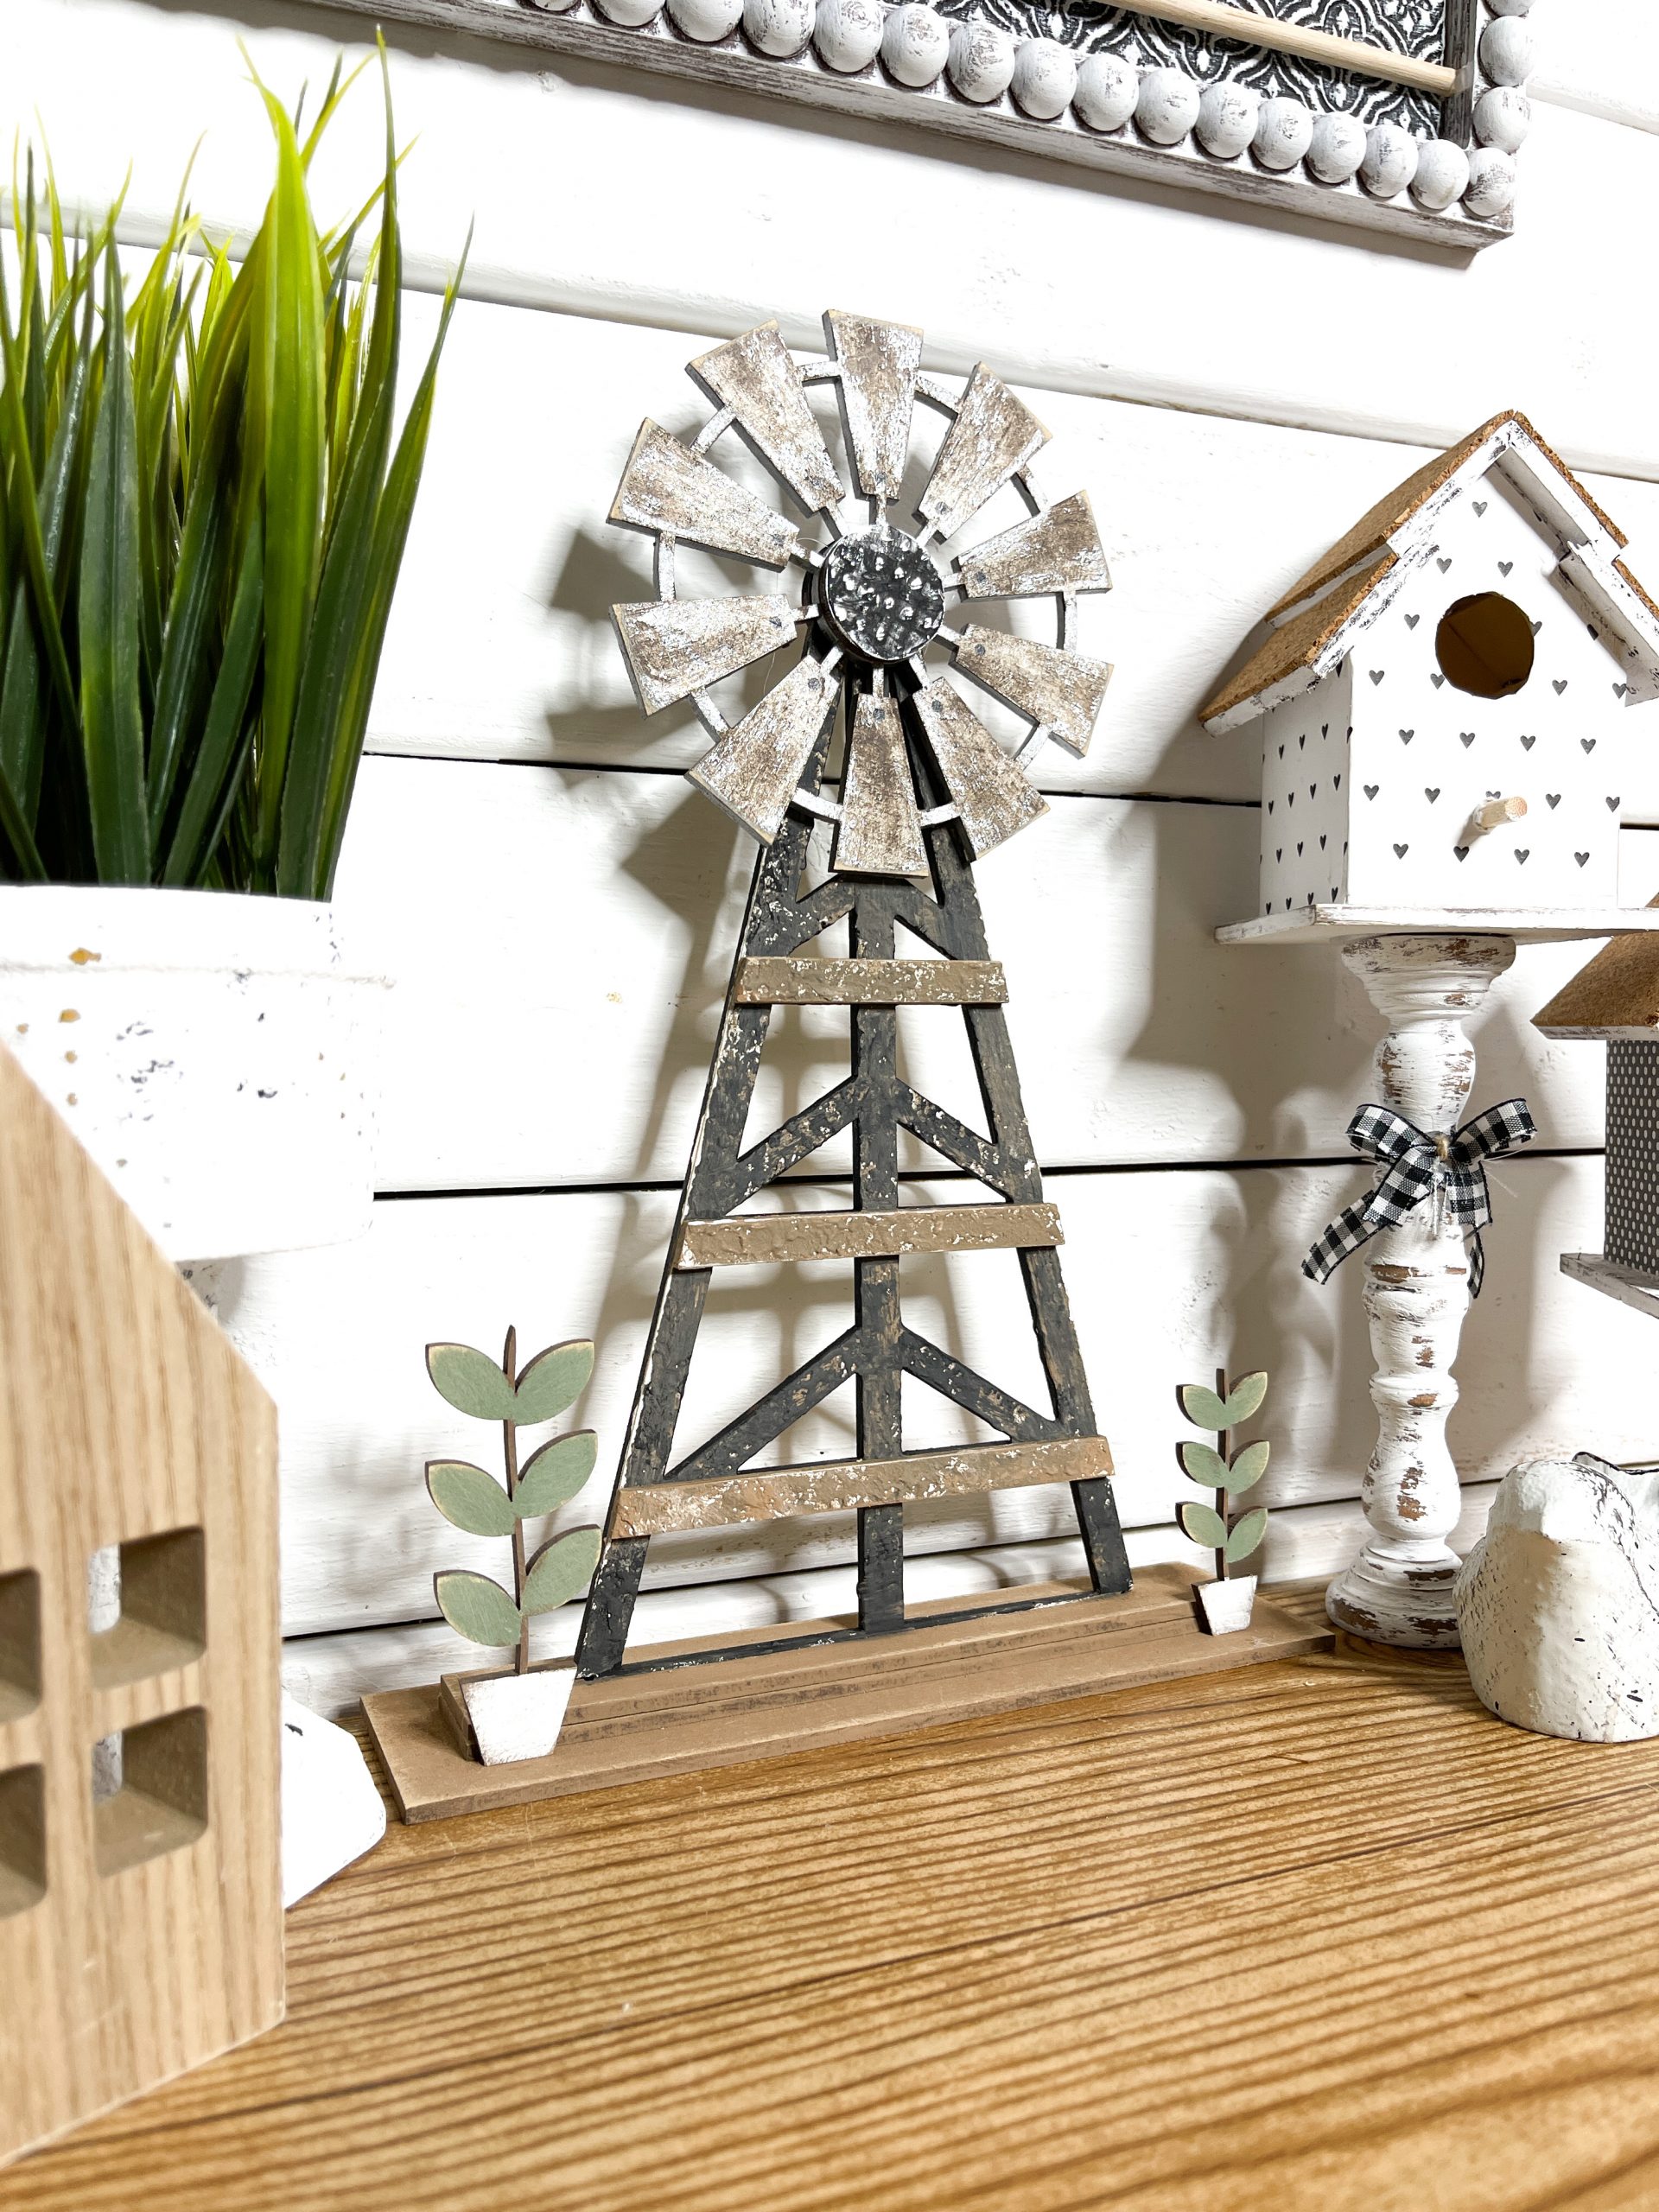 DIY Decorative Windmill